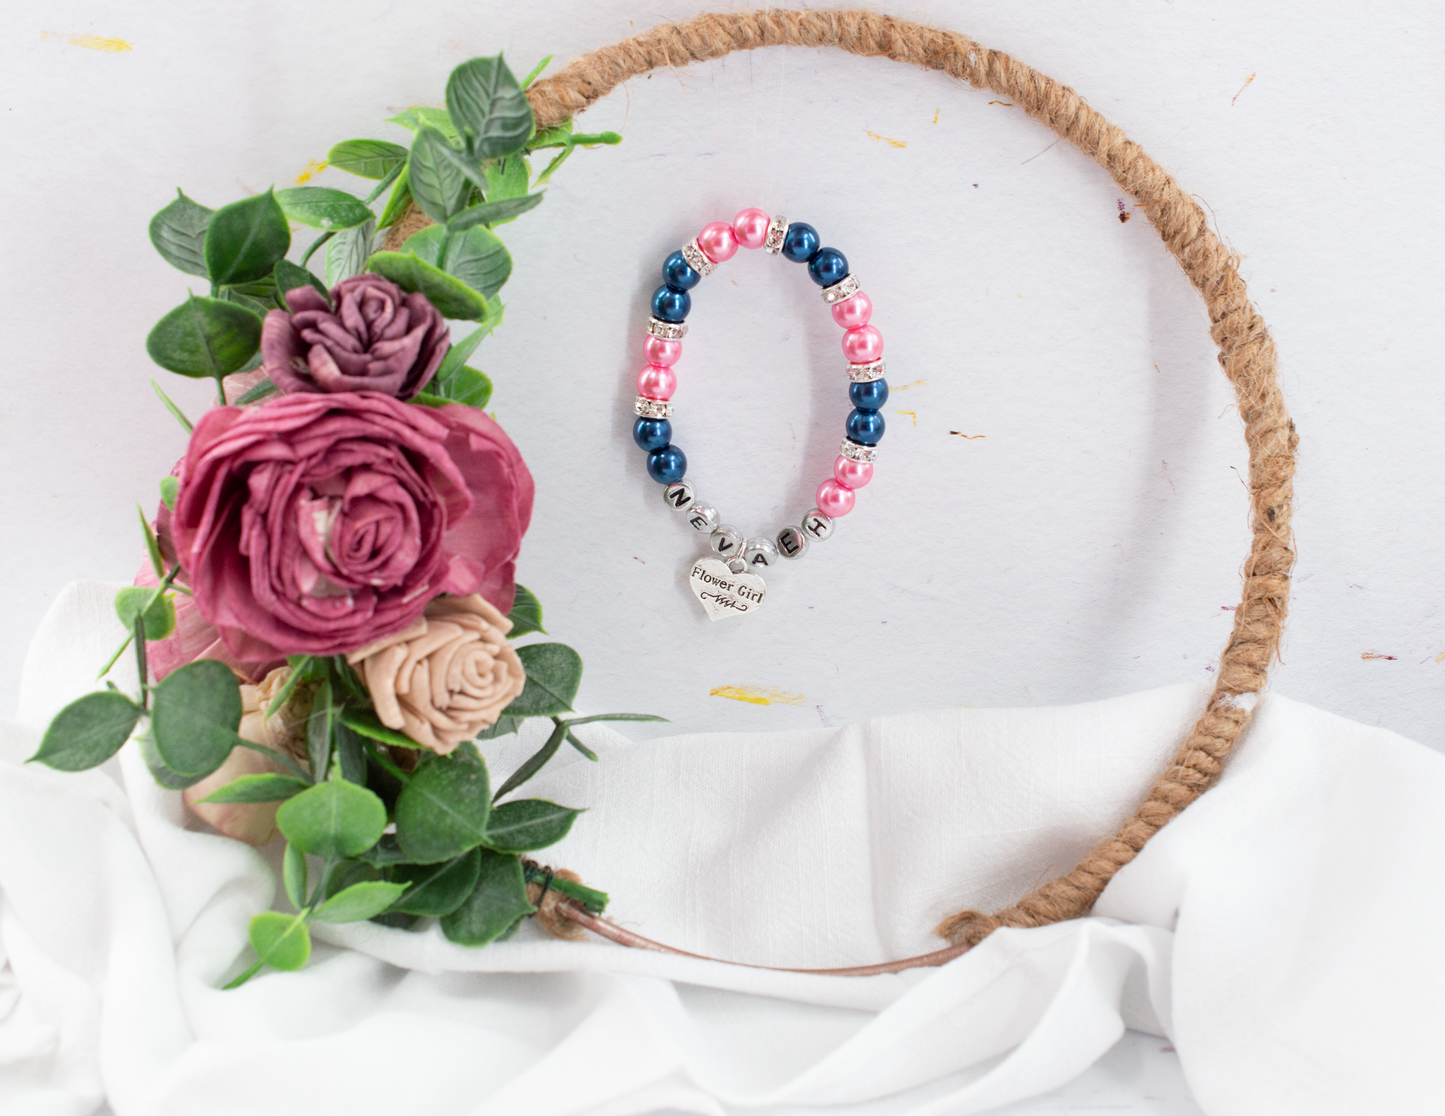 Name Flower Girl Rhinestone Bracelet | Coral + Navy